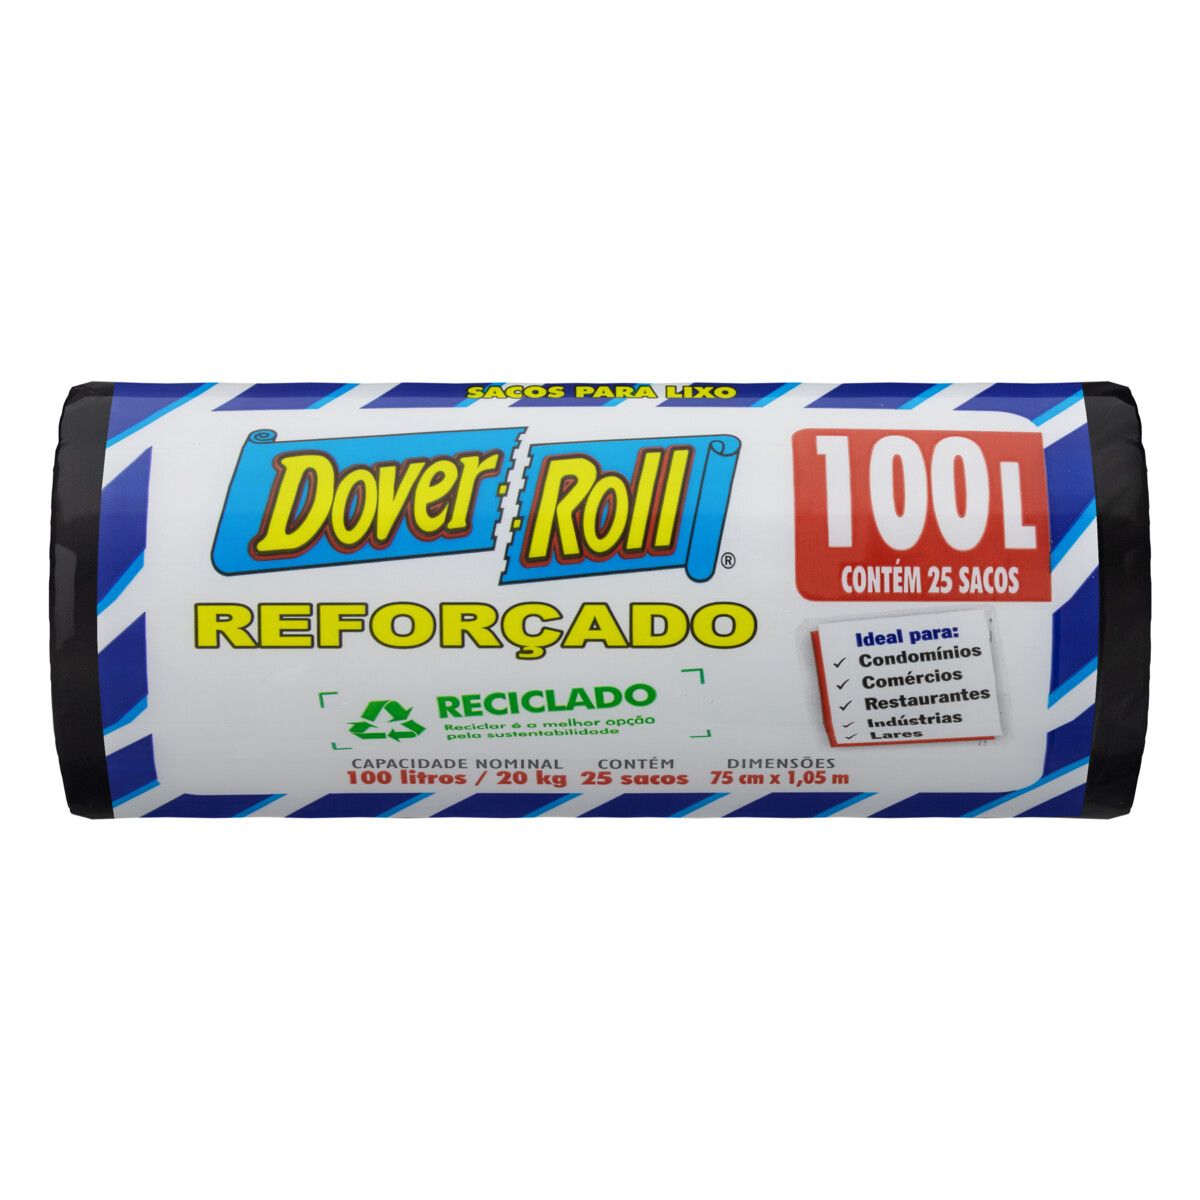 Saco para Lixo Dover Roll 100L Reforçado 25 Unidades image number 0